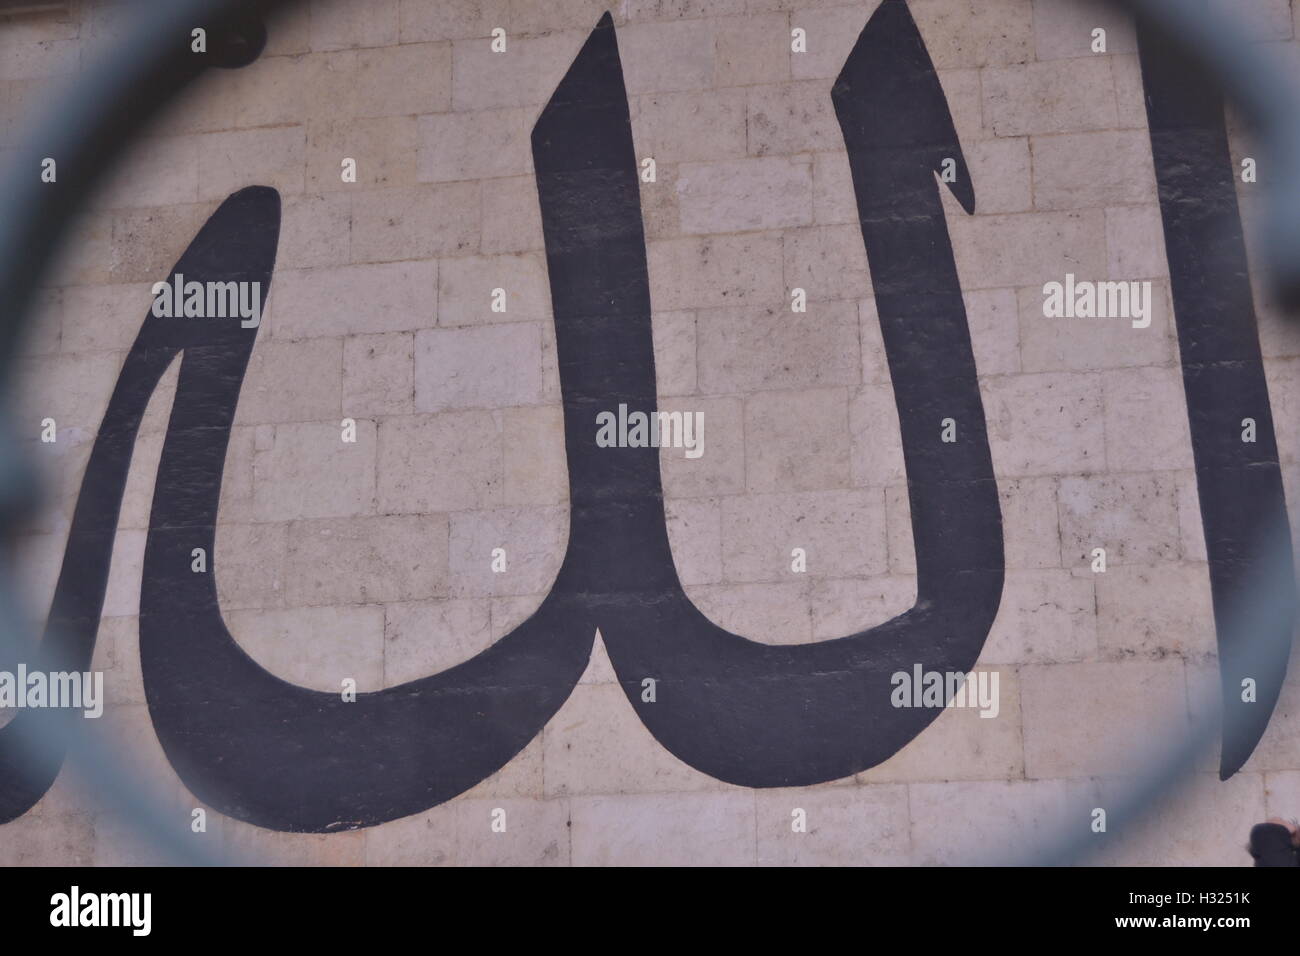 allah, god, religion, selimiye mosque, edirne, Stock Photo